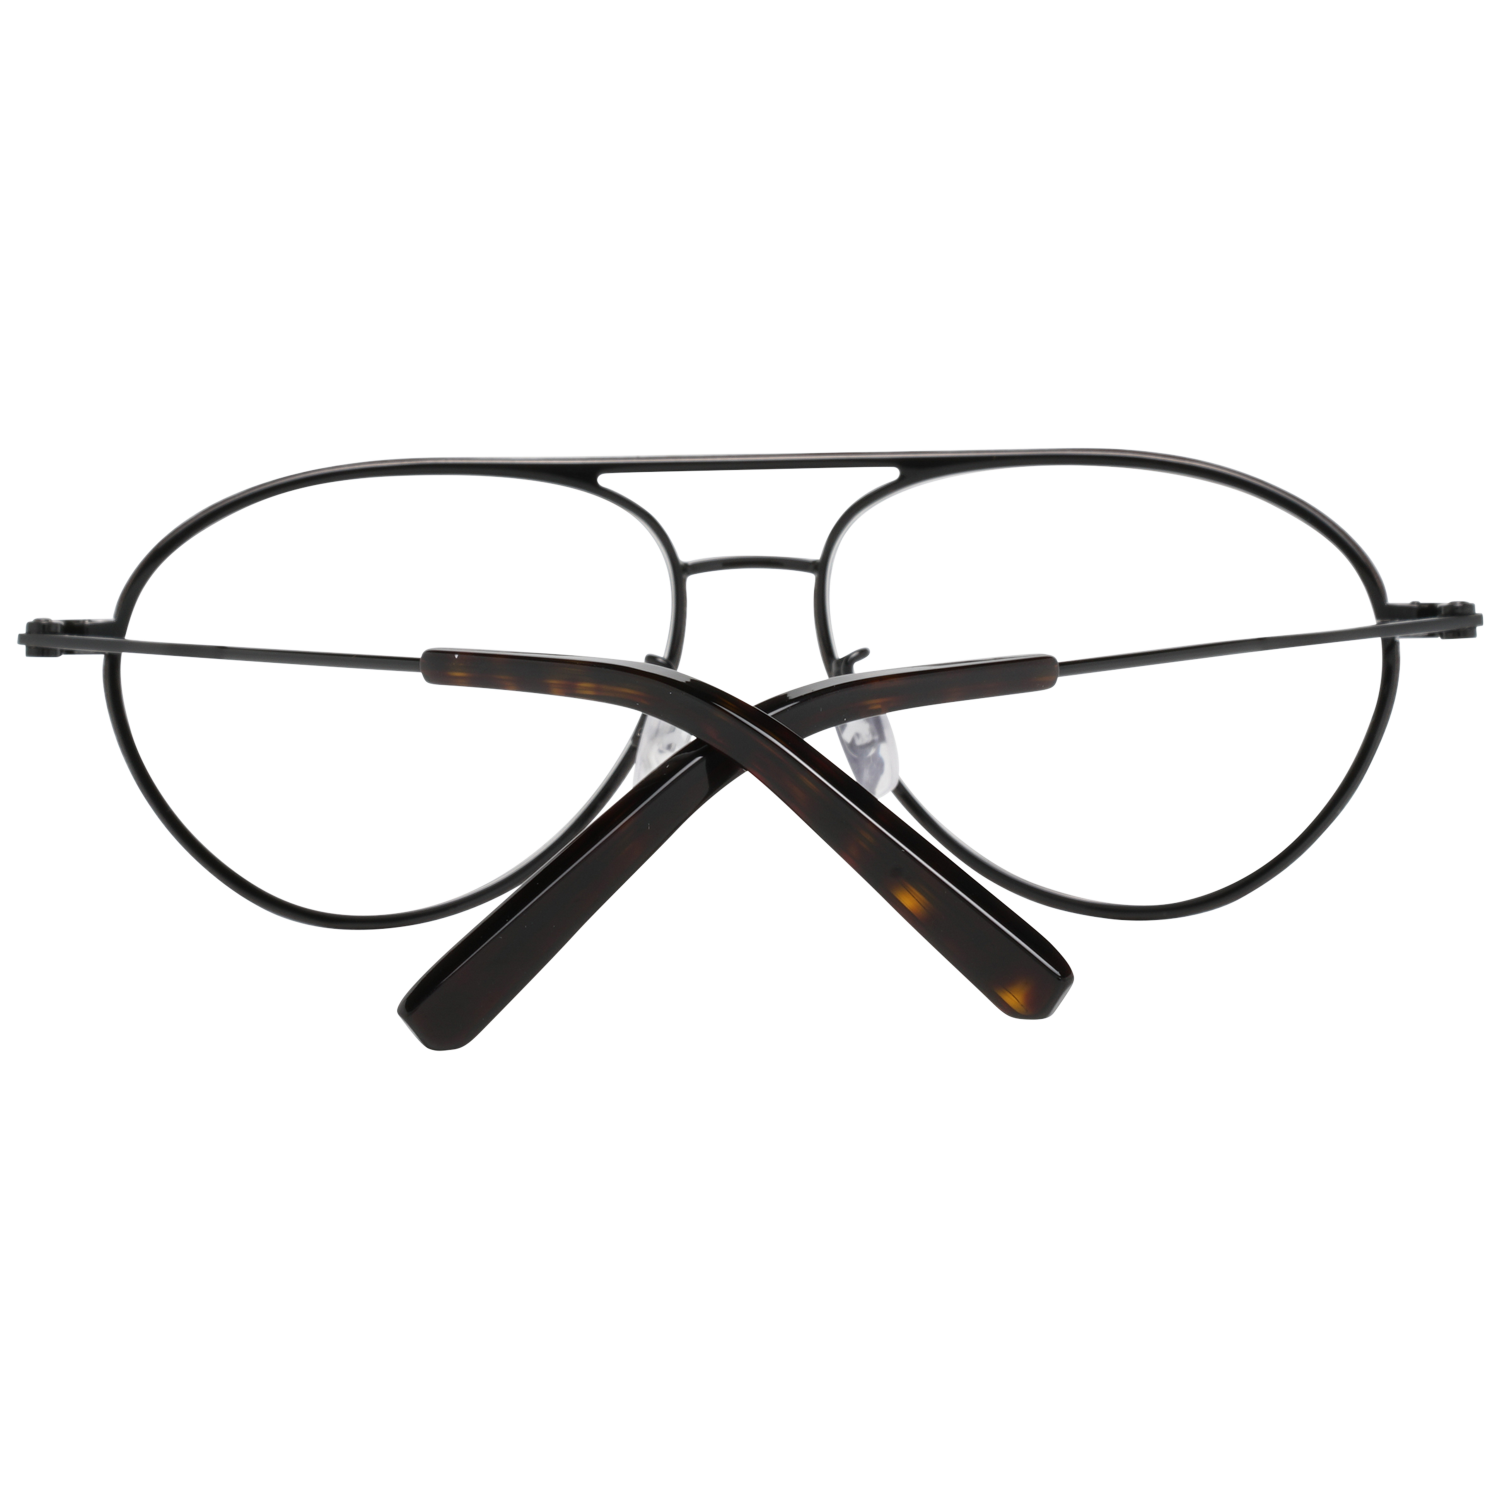 Bally Optical Frame Bally Eyeglasses Frames BY5013-H 001 57 Men Eyeglasses Eyewear UK USA Australia 